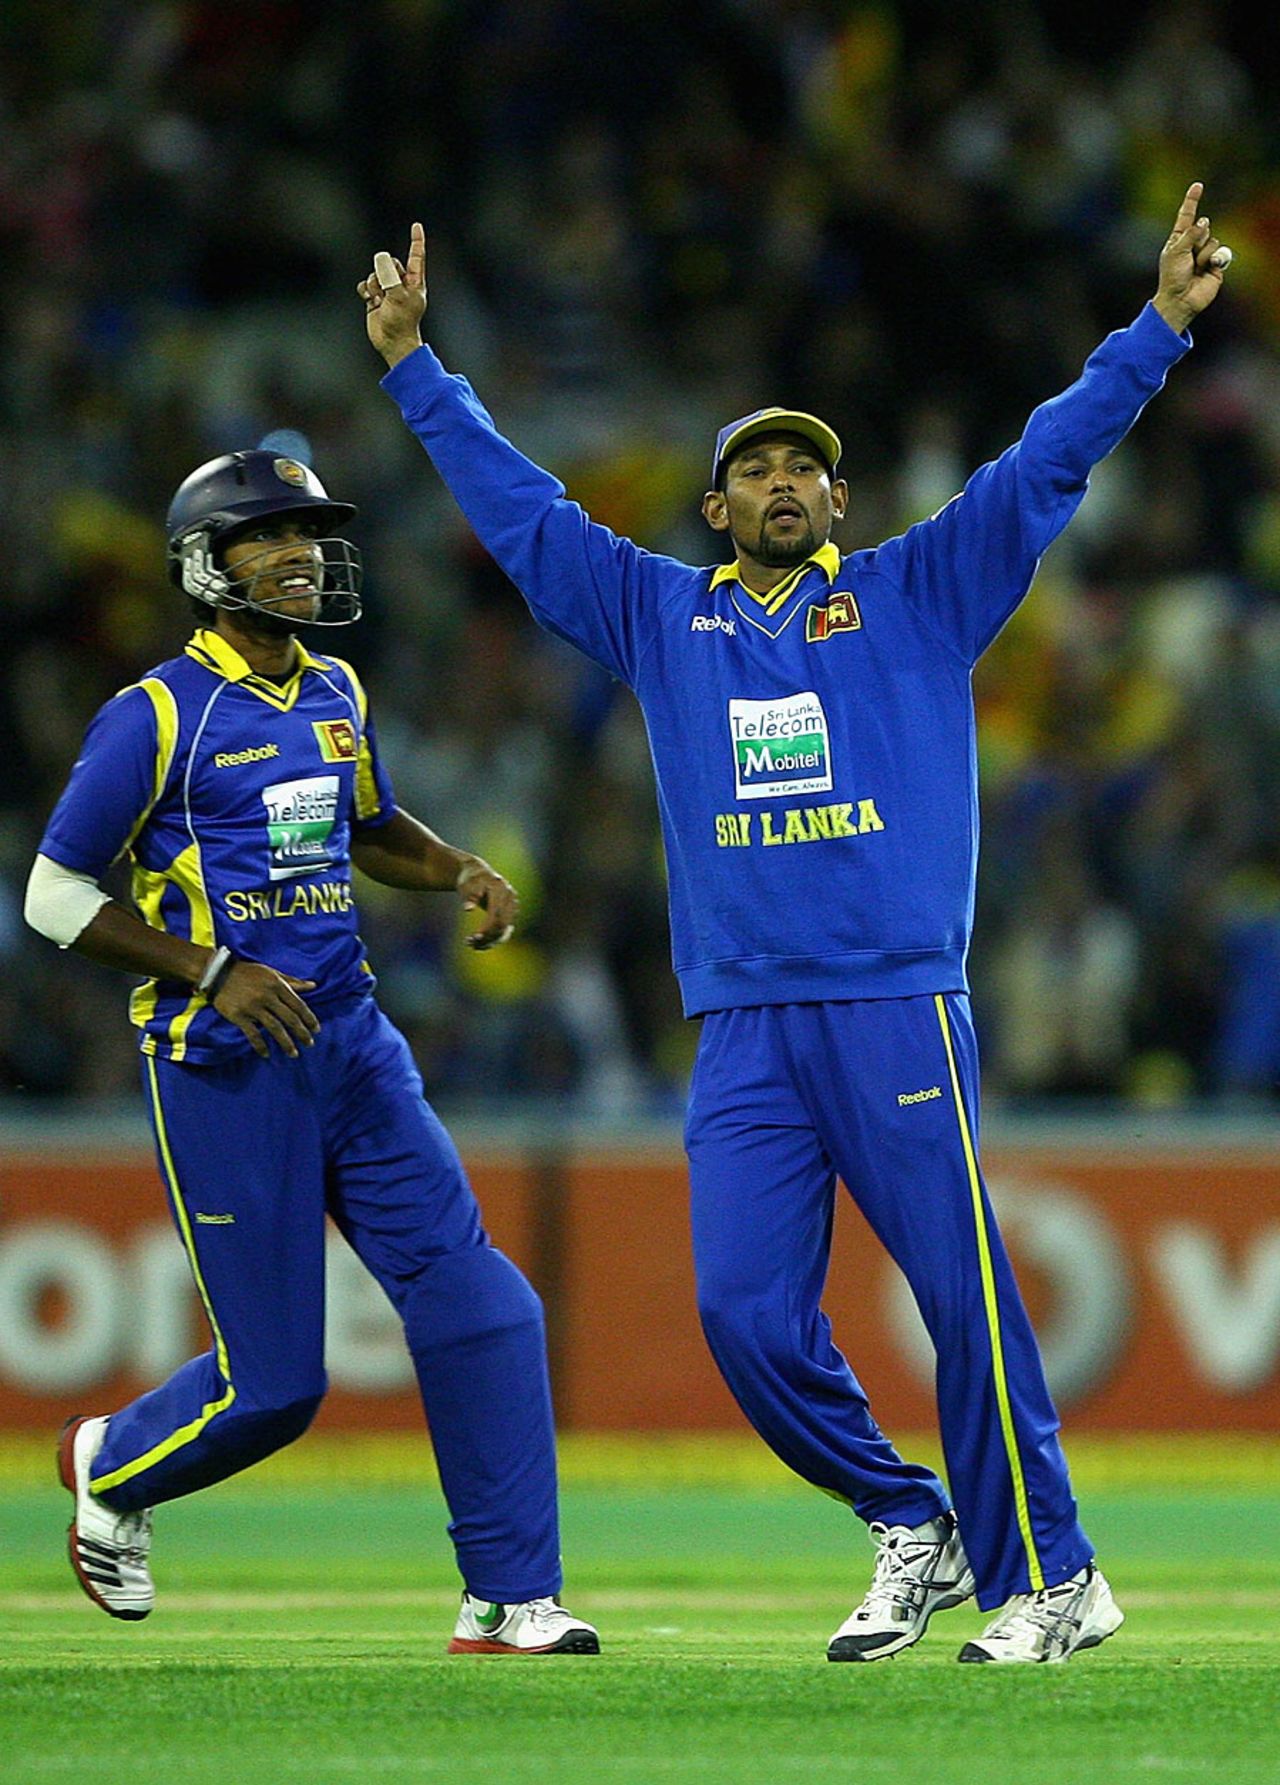 Tillakaratne Dilshan took a catch to dismiss James Pattinson, Australia v Sri Lanka, CB series, Melbourne, March 2, 2012